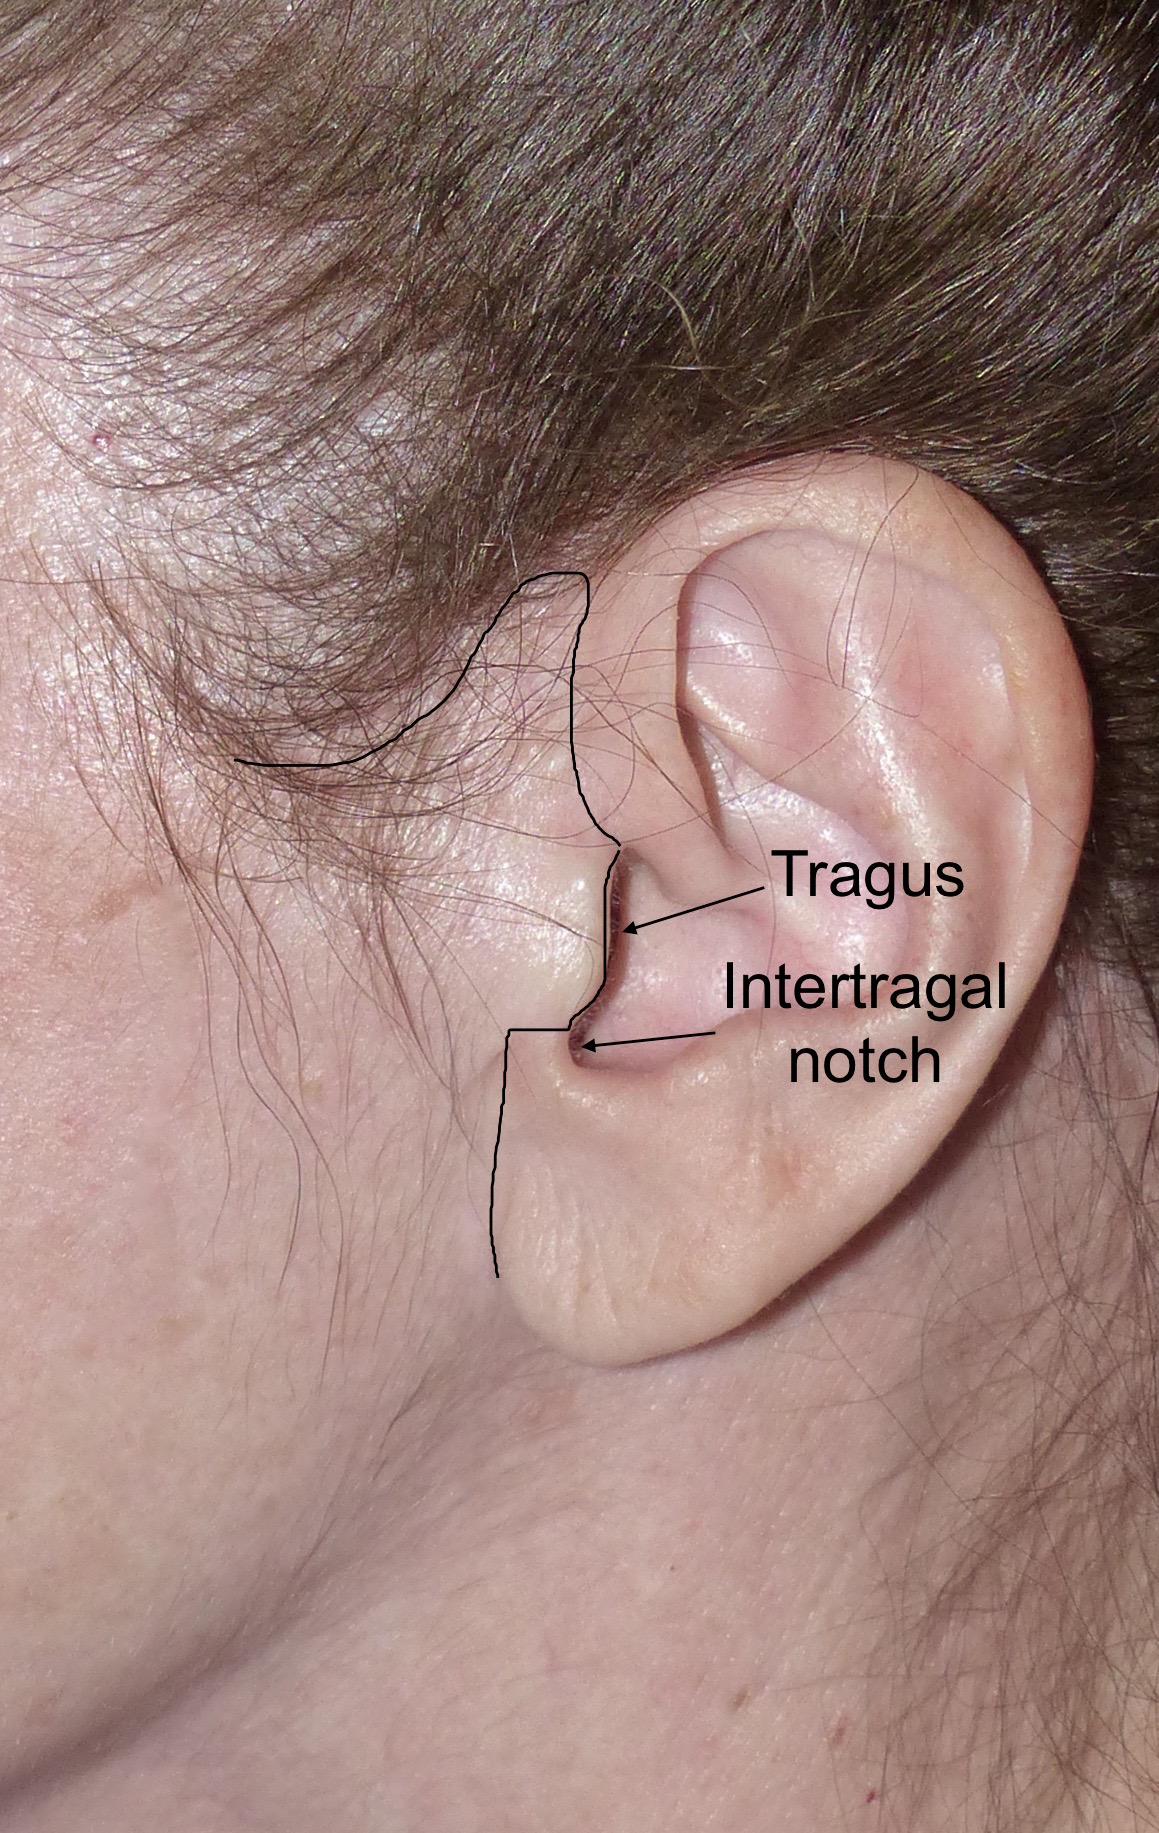 Blog - FACELIFT SCARS Photo Female ear zone - Tragus, Intertragal notch